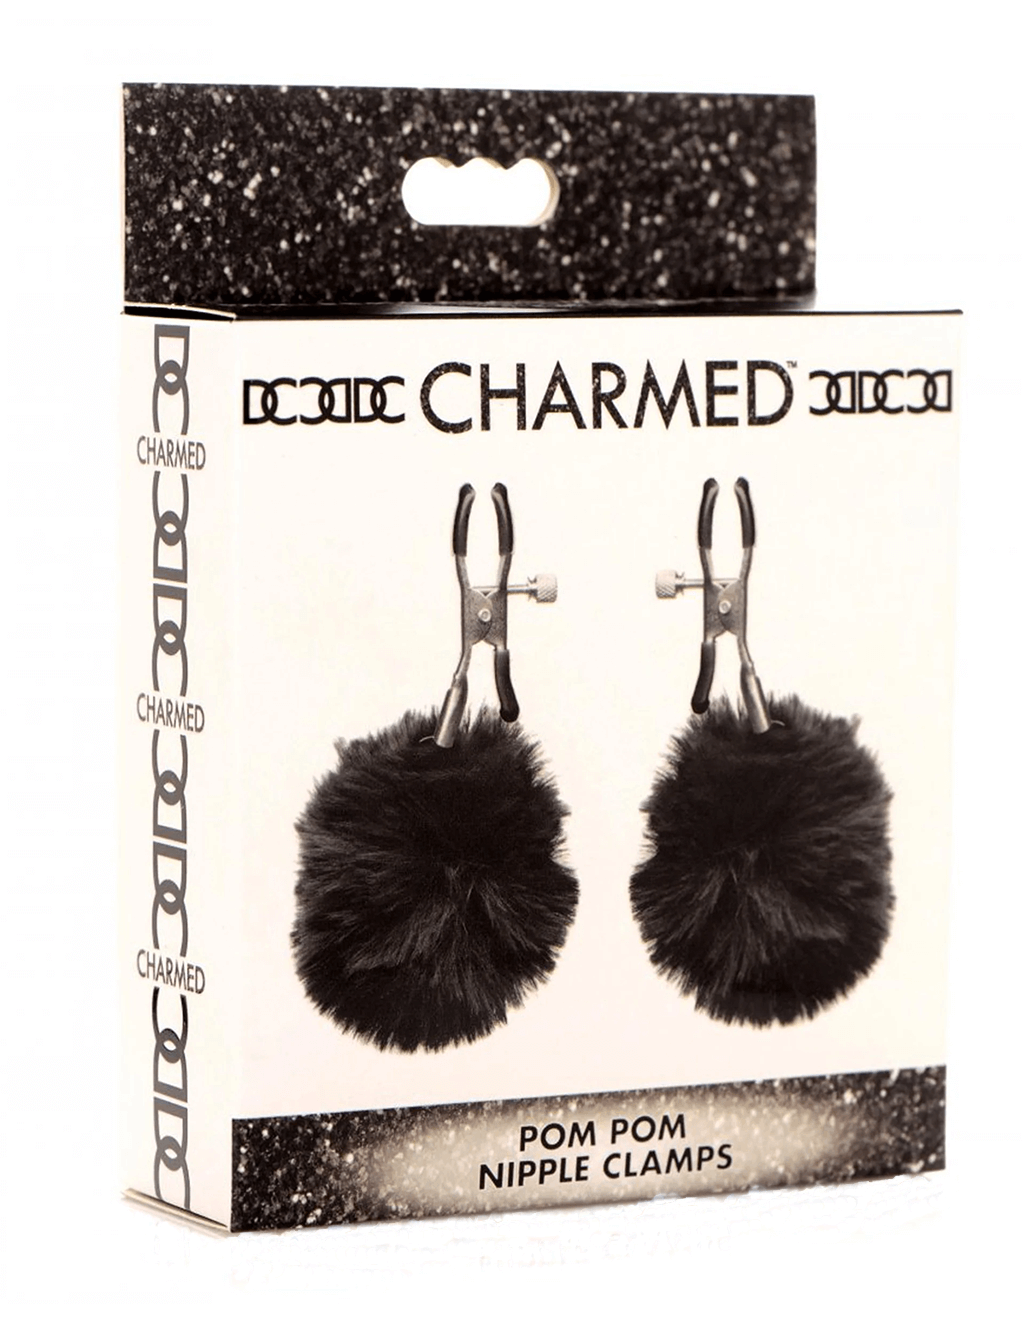 Charmed Pom Pom Nipple Clamps - Black - Box